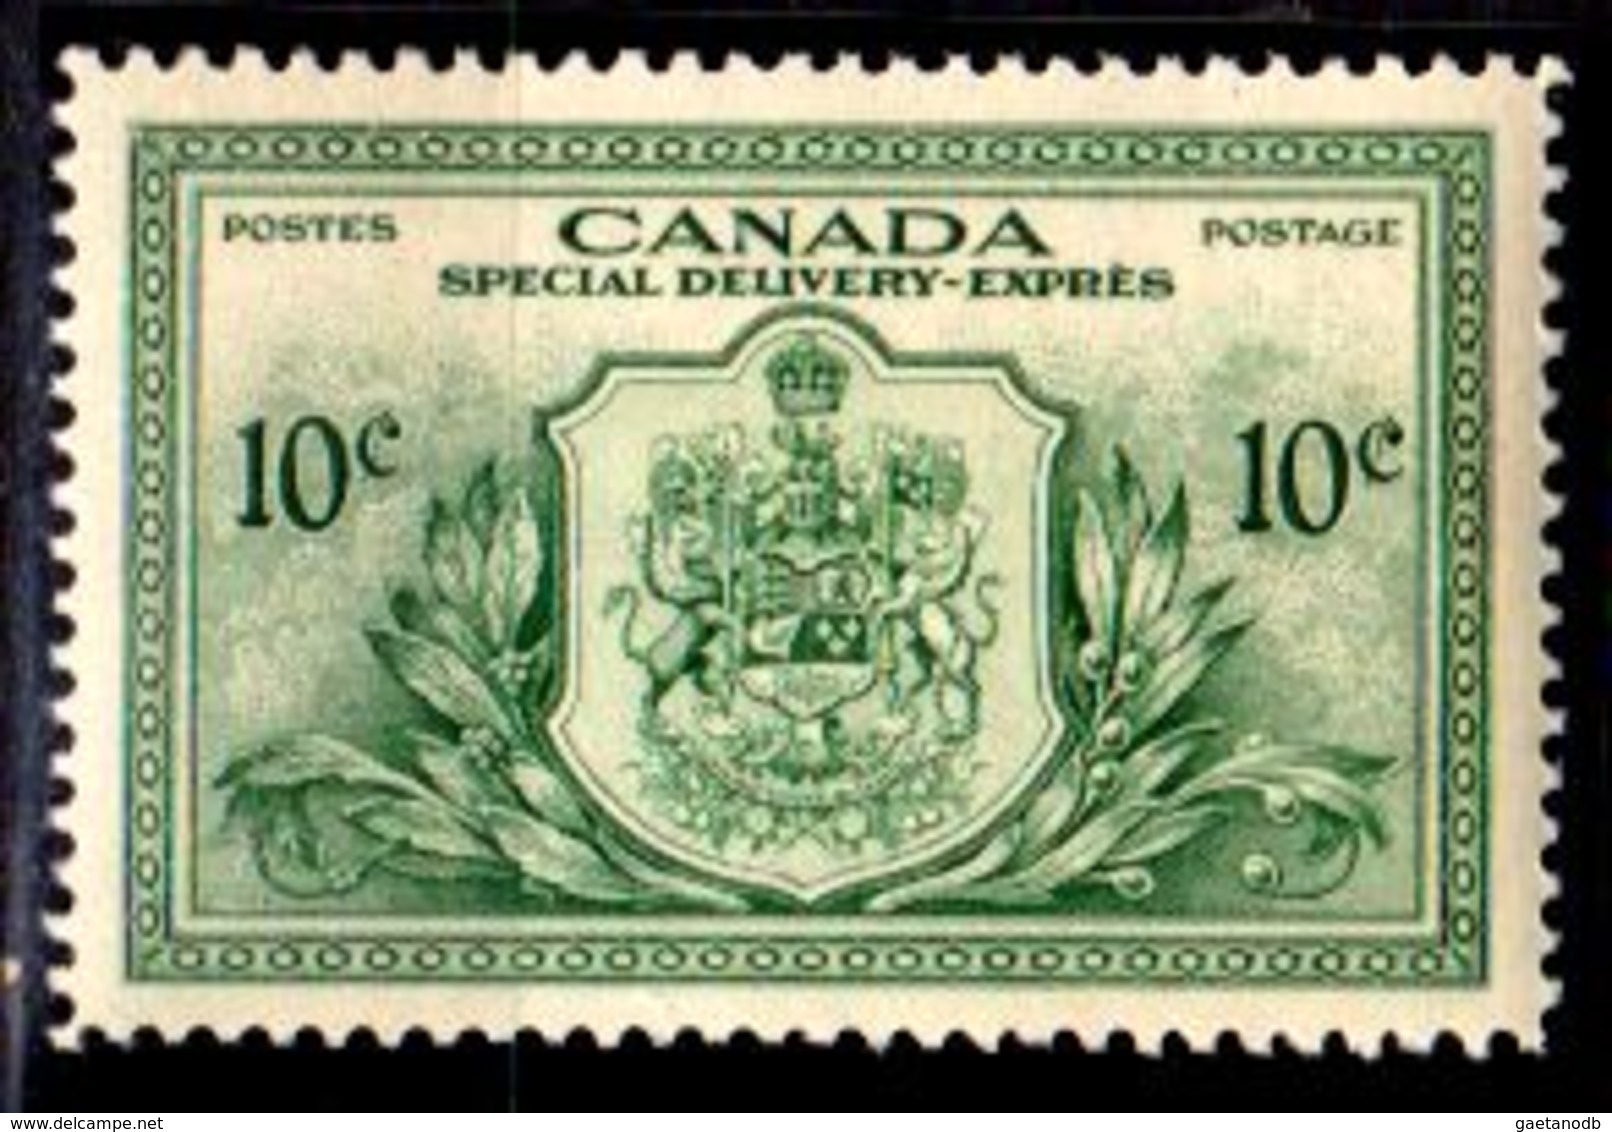 B346-Canada: EXPRES. 1946 (++) MNH - Senza Difetti Occulti - - Special Delivery